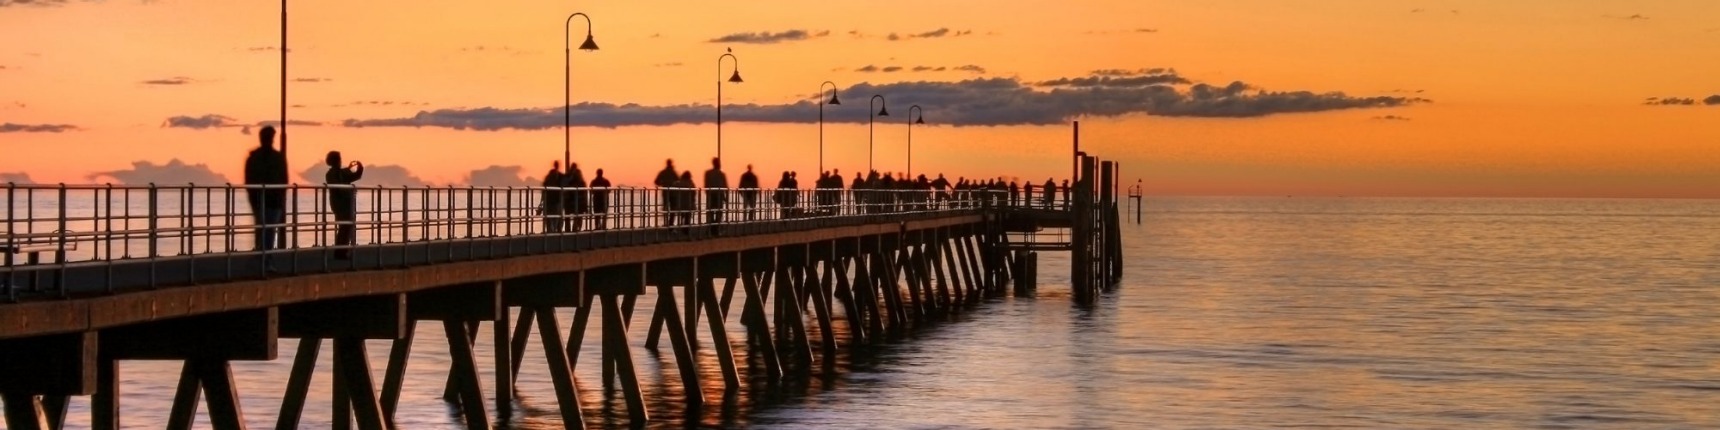 South Australia, pier